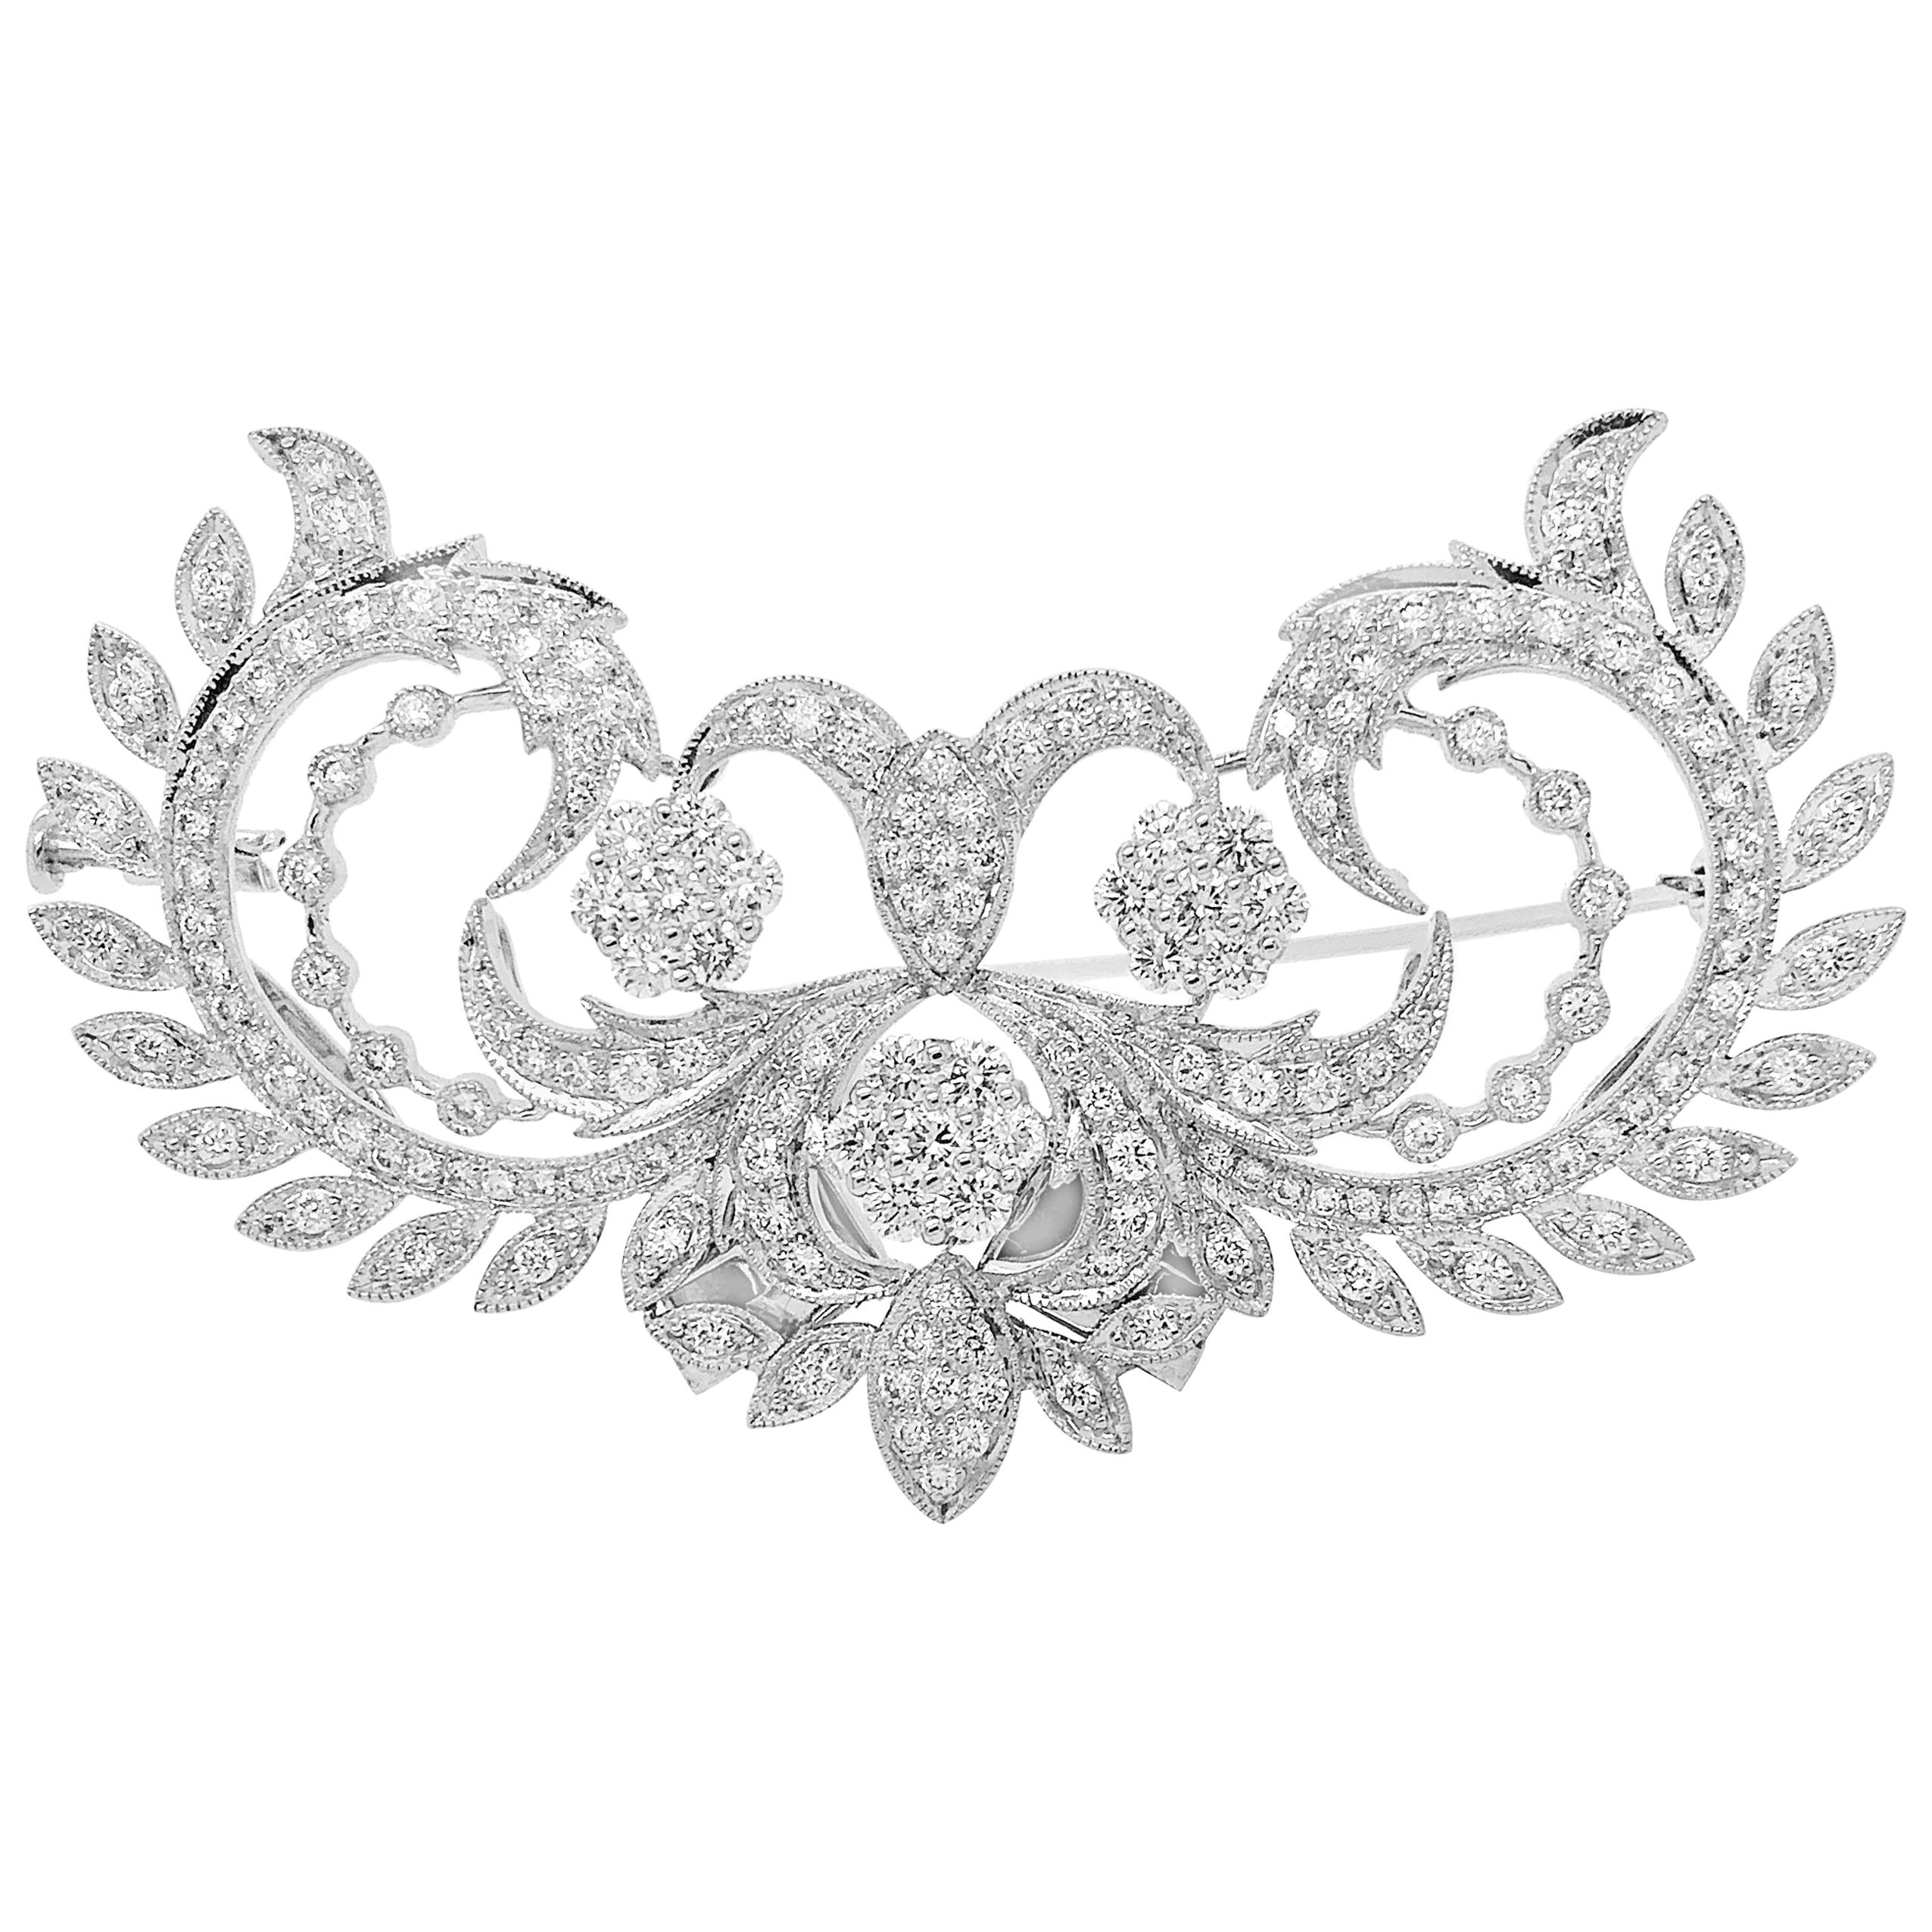 Floral Motif Diamond Brooch or Pendant